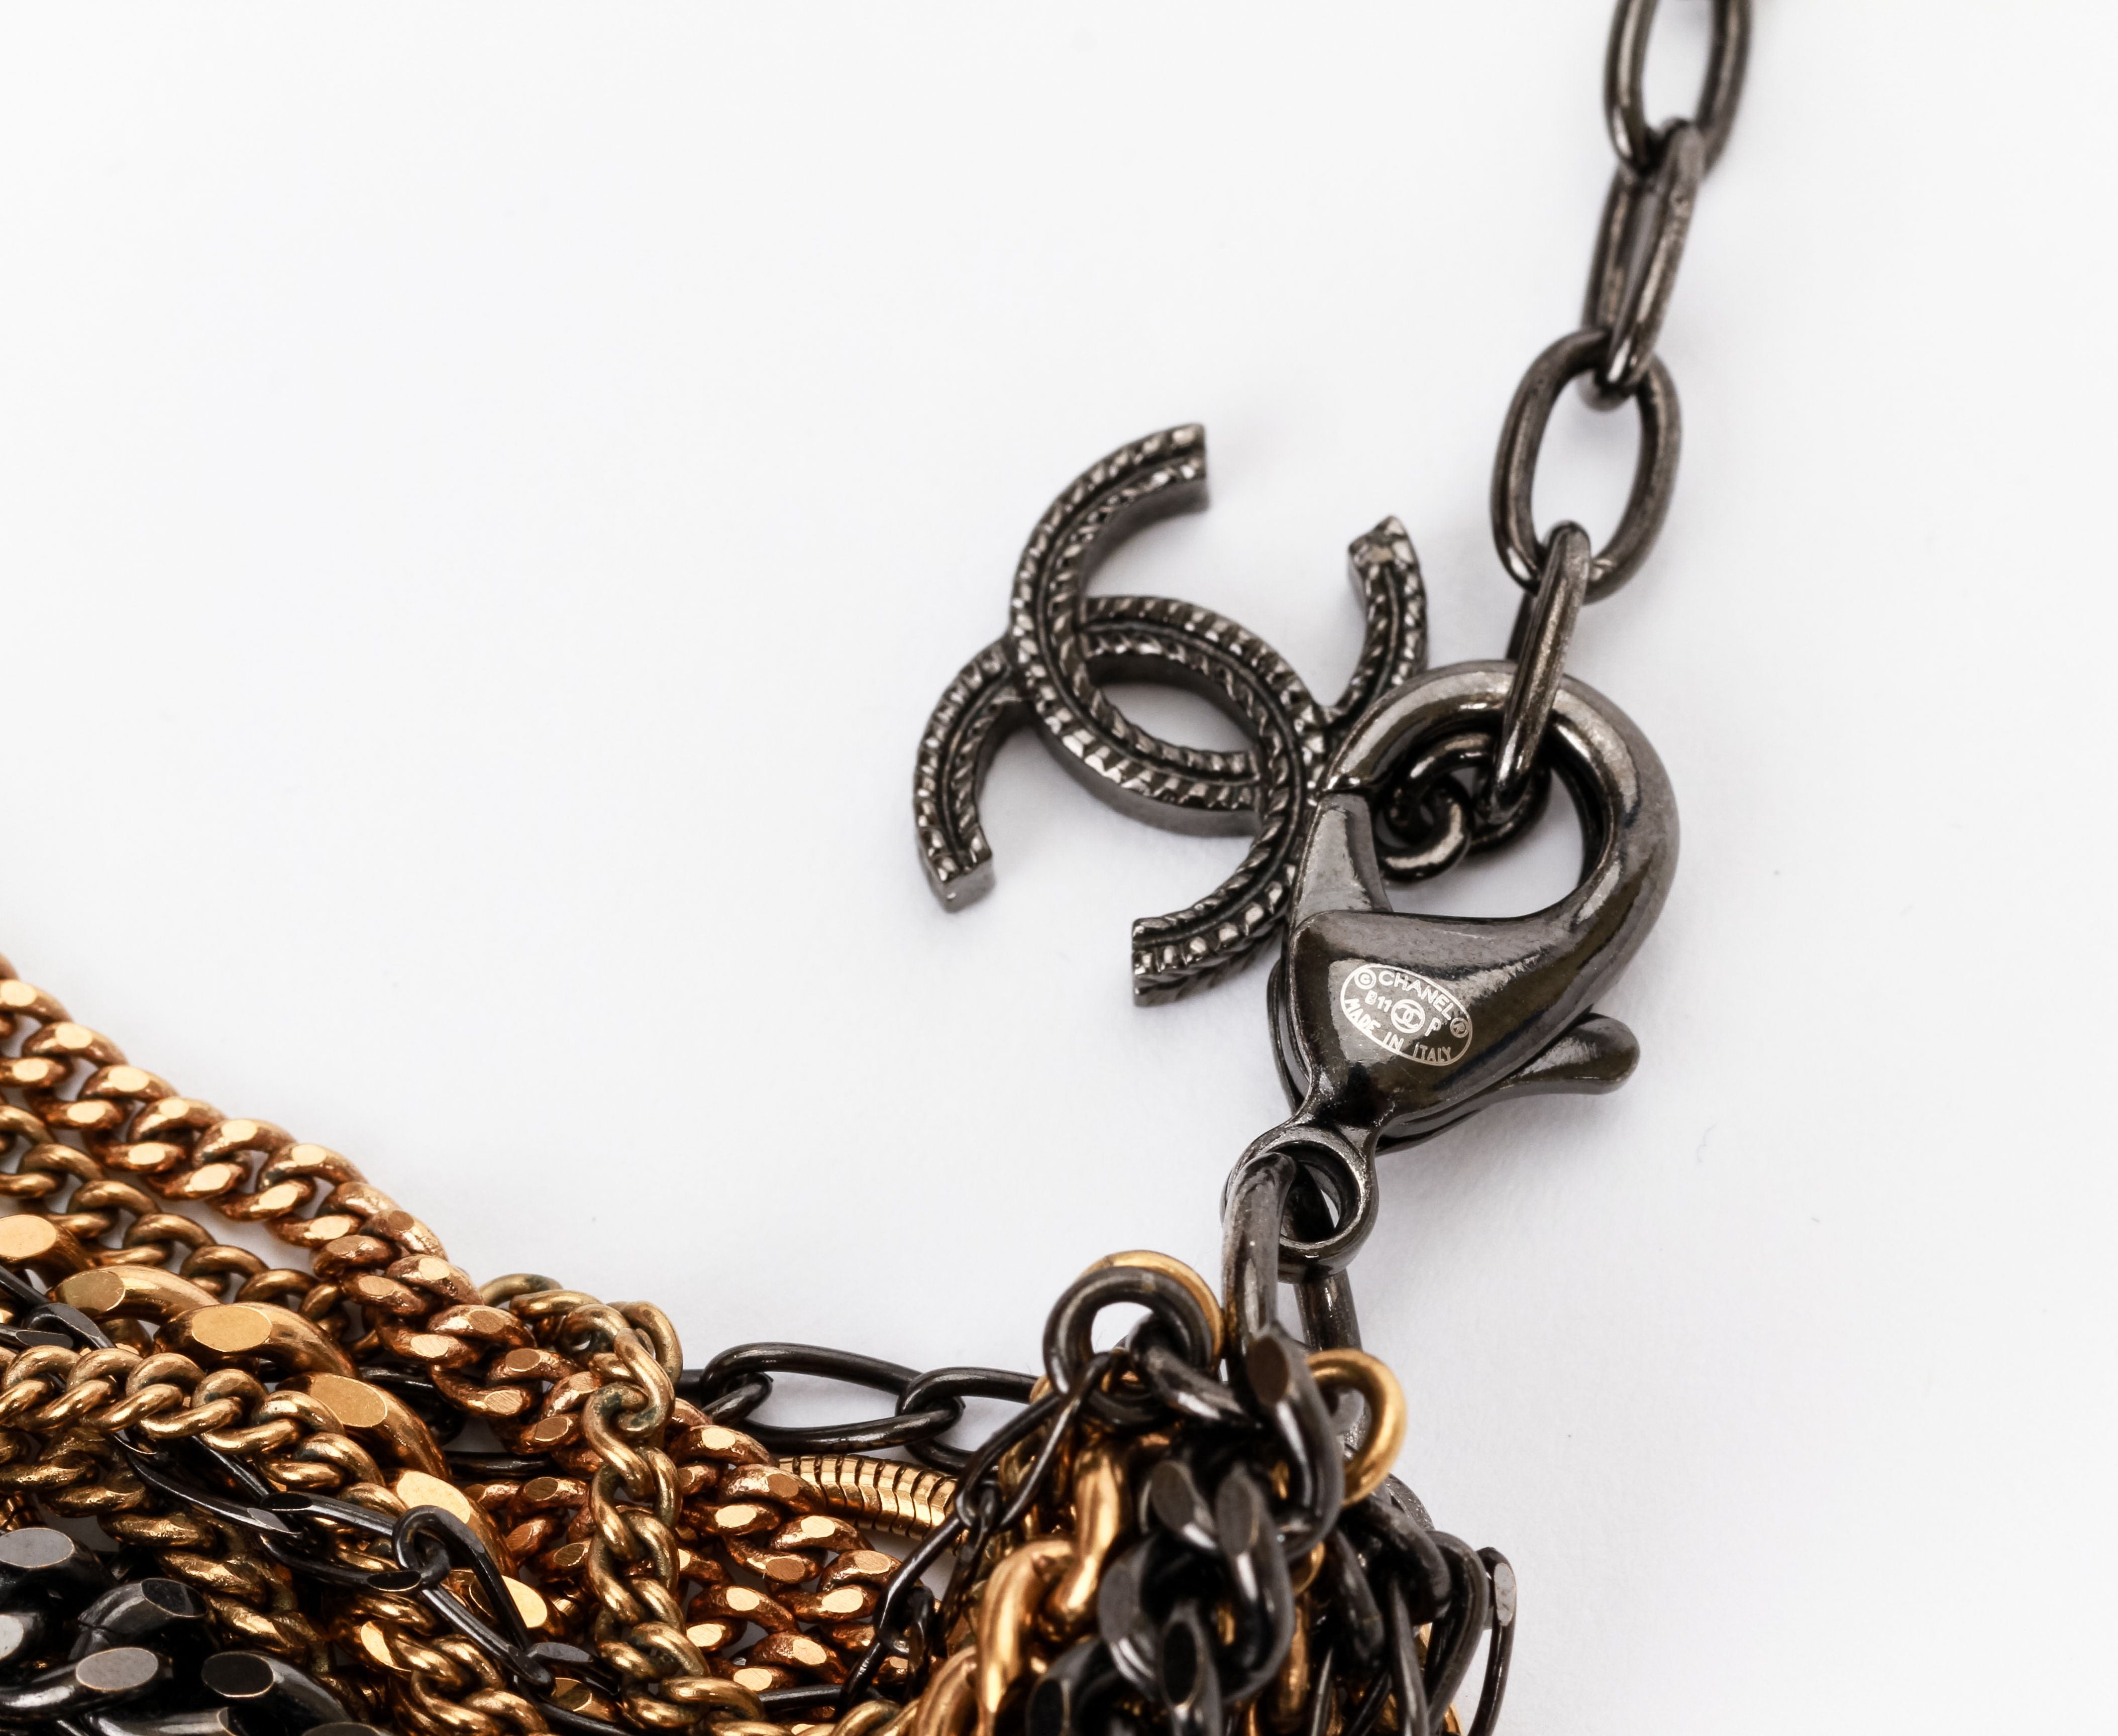 black chanel necklace